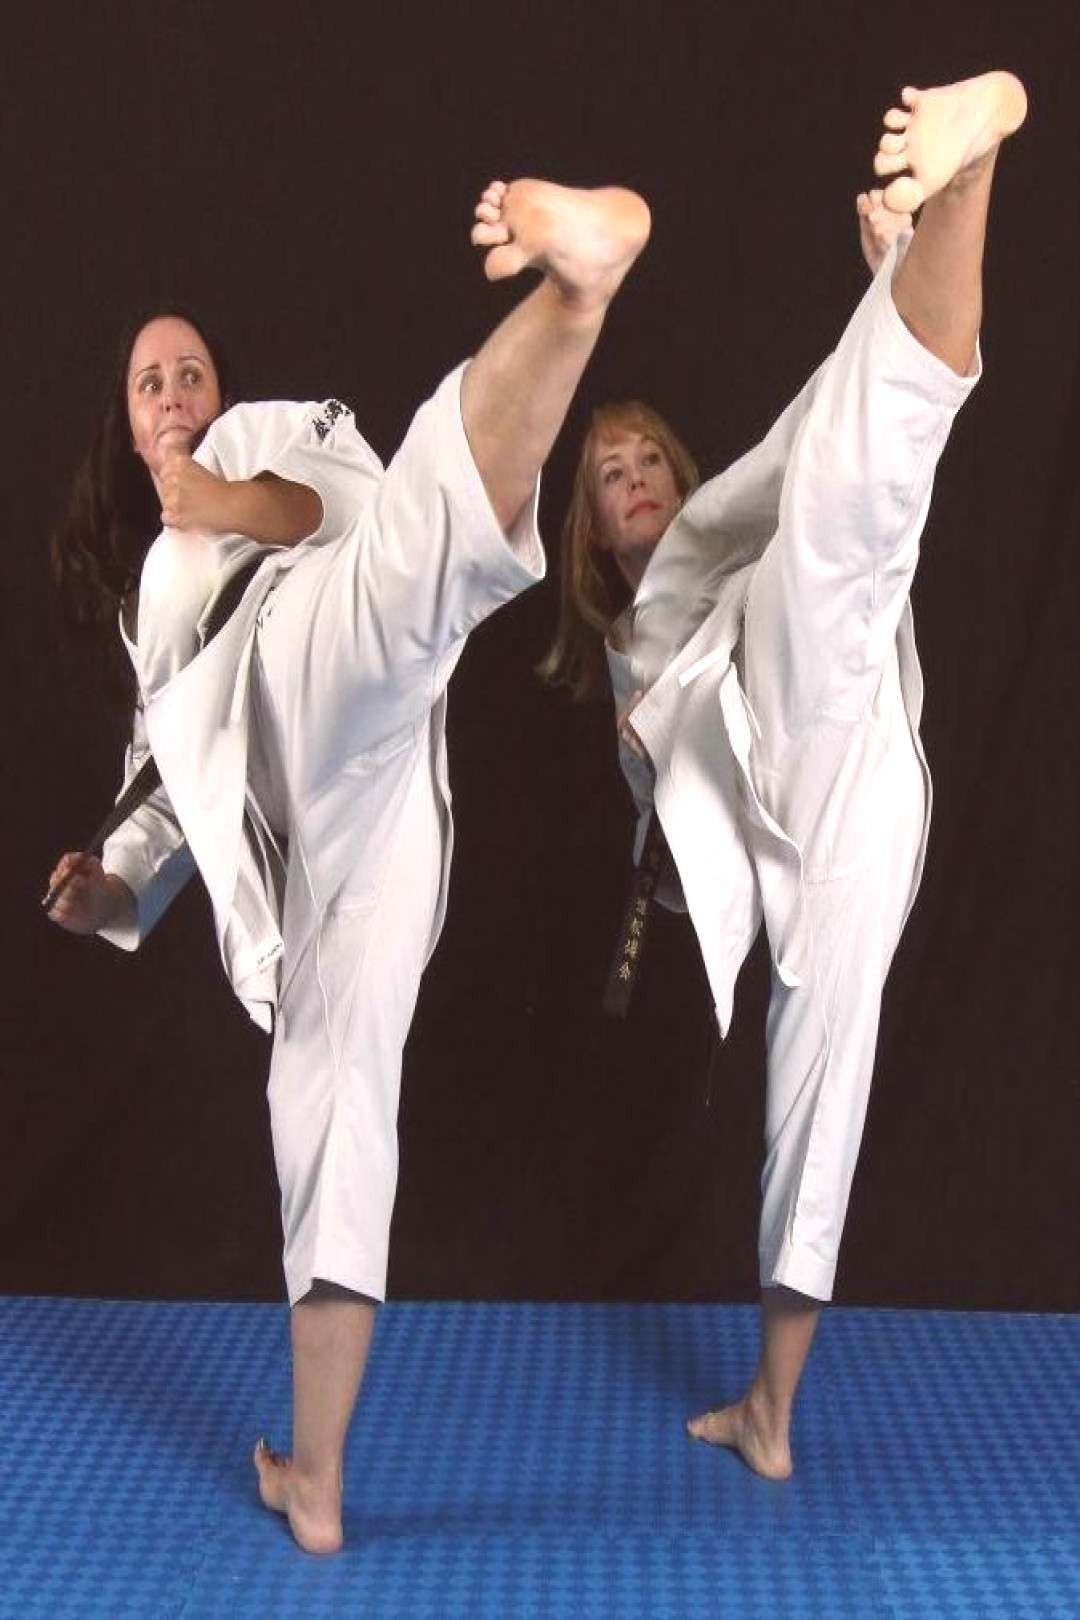 Best of Female karate face kick